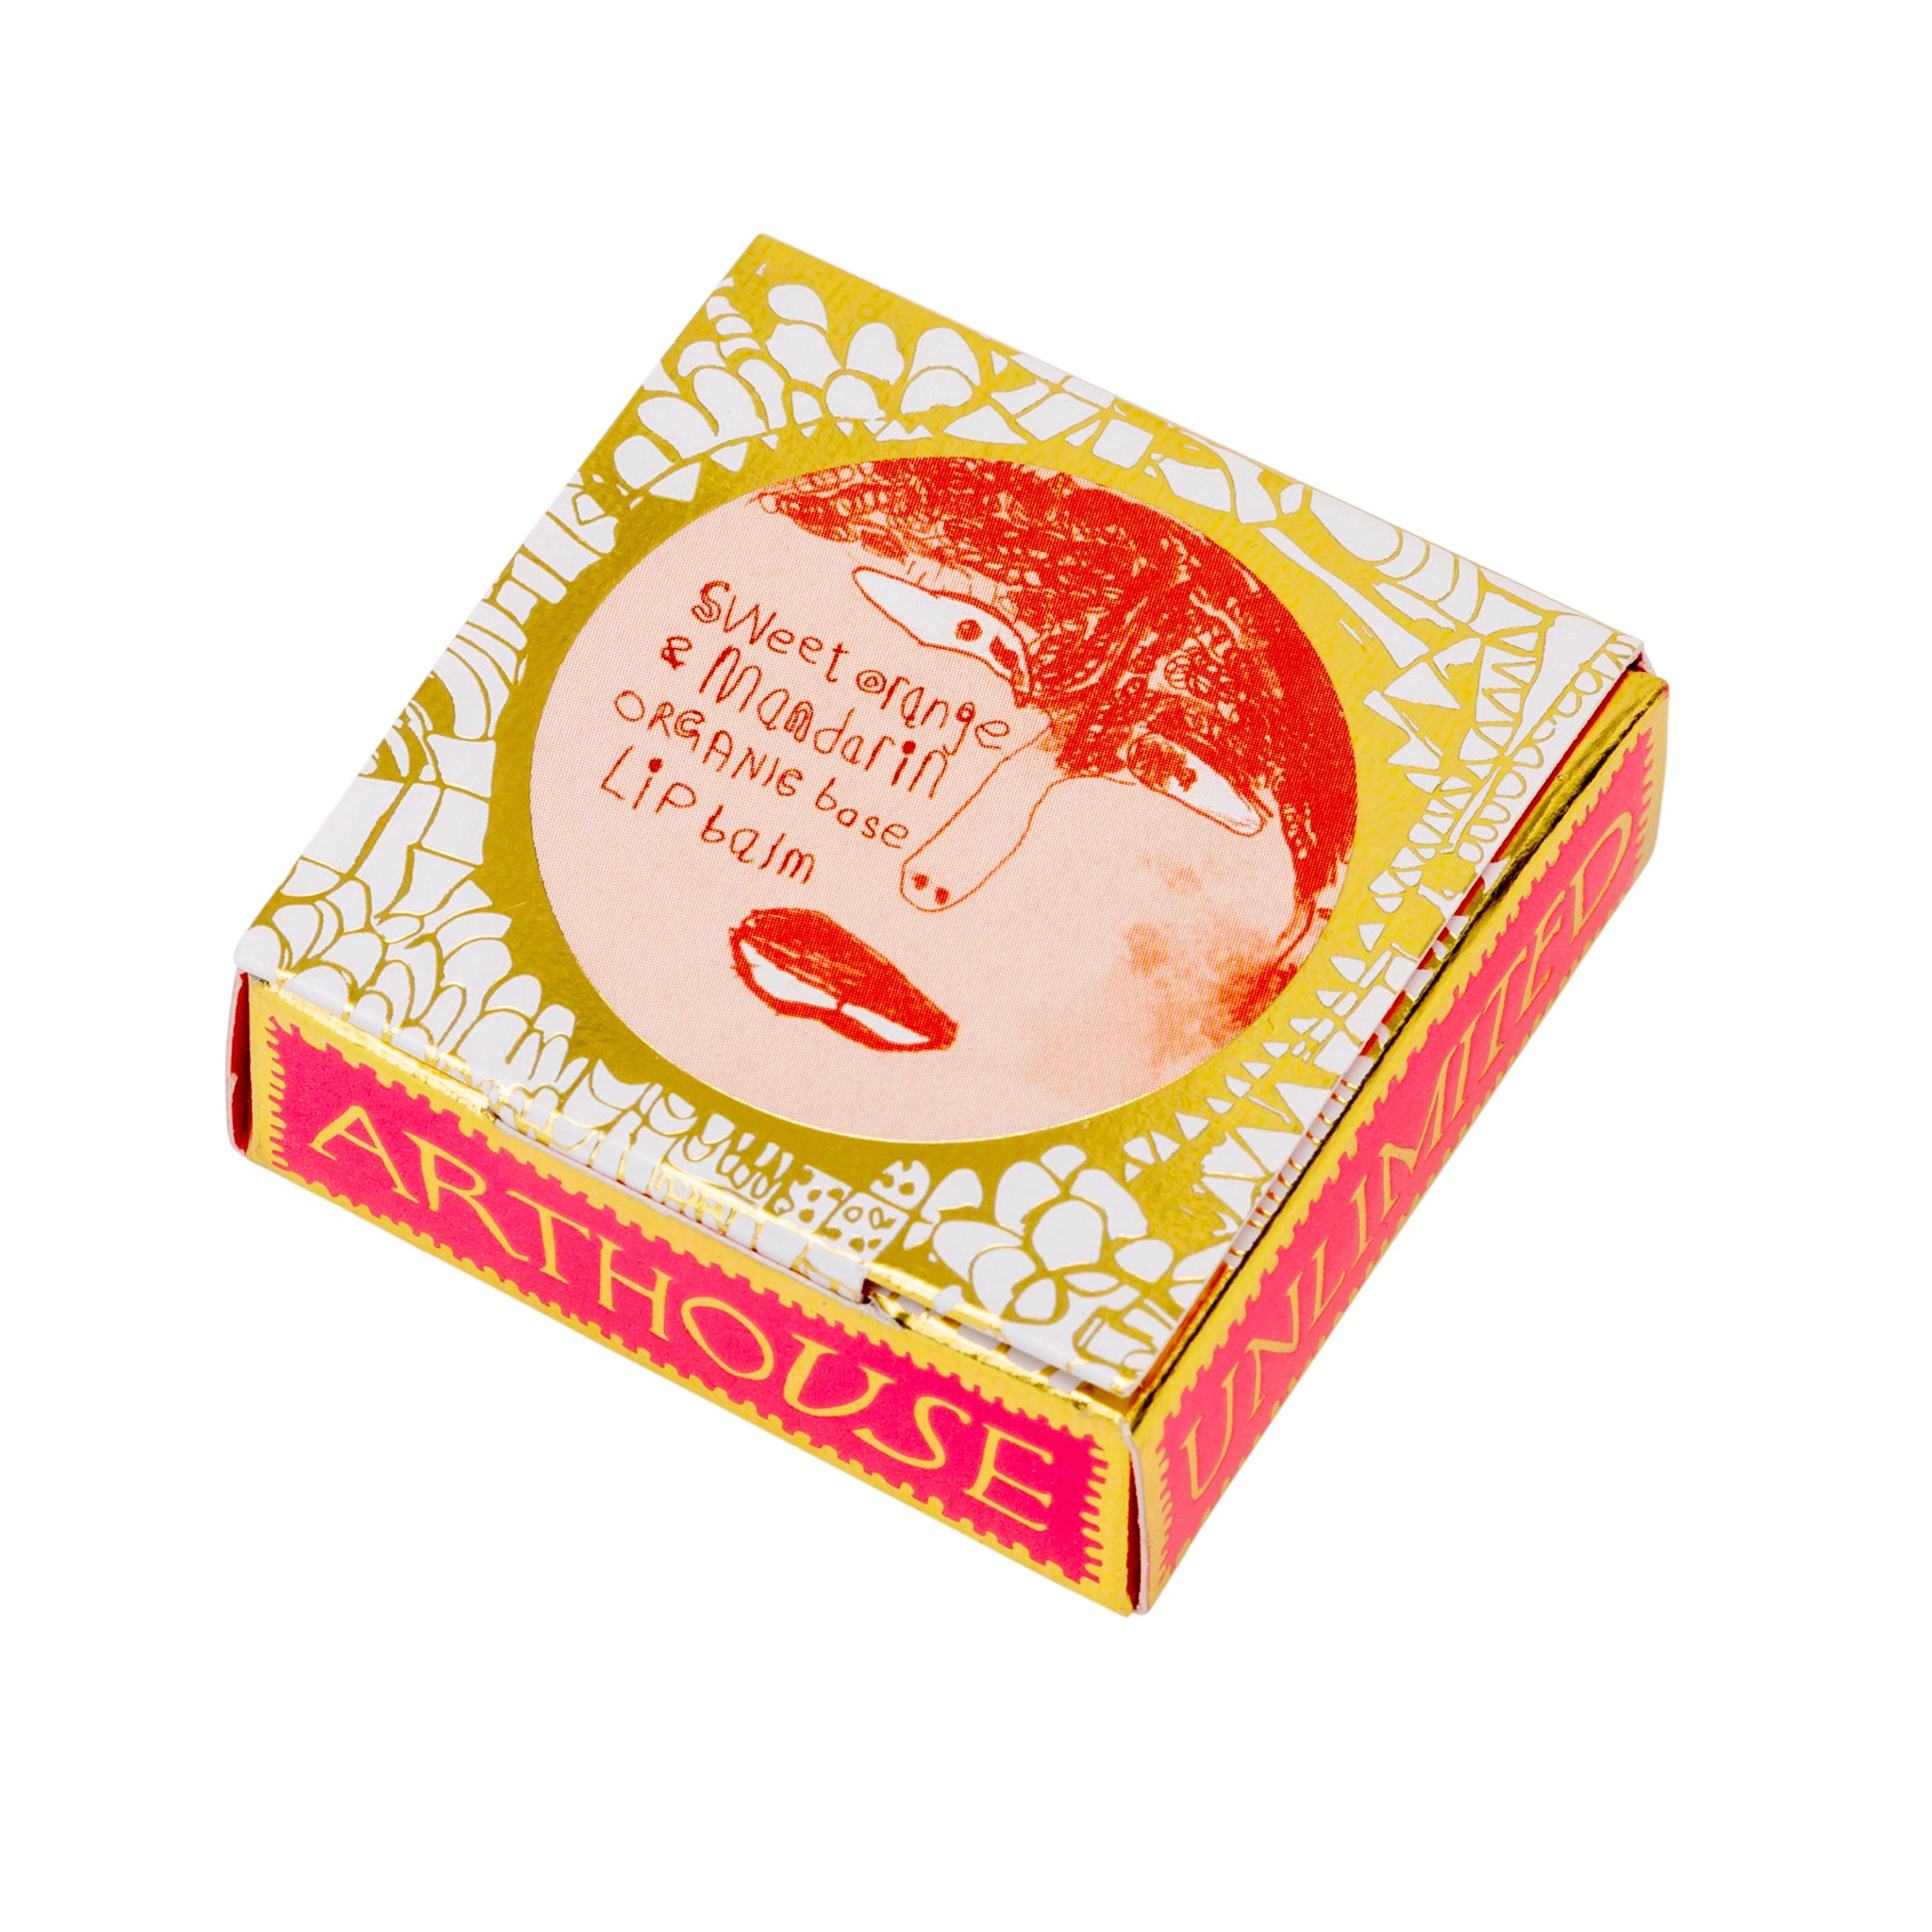 Pink and gold box of Lady Muck, Lip Balm, Sweet Orange & Mandarin